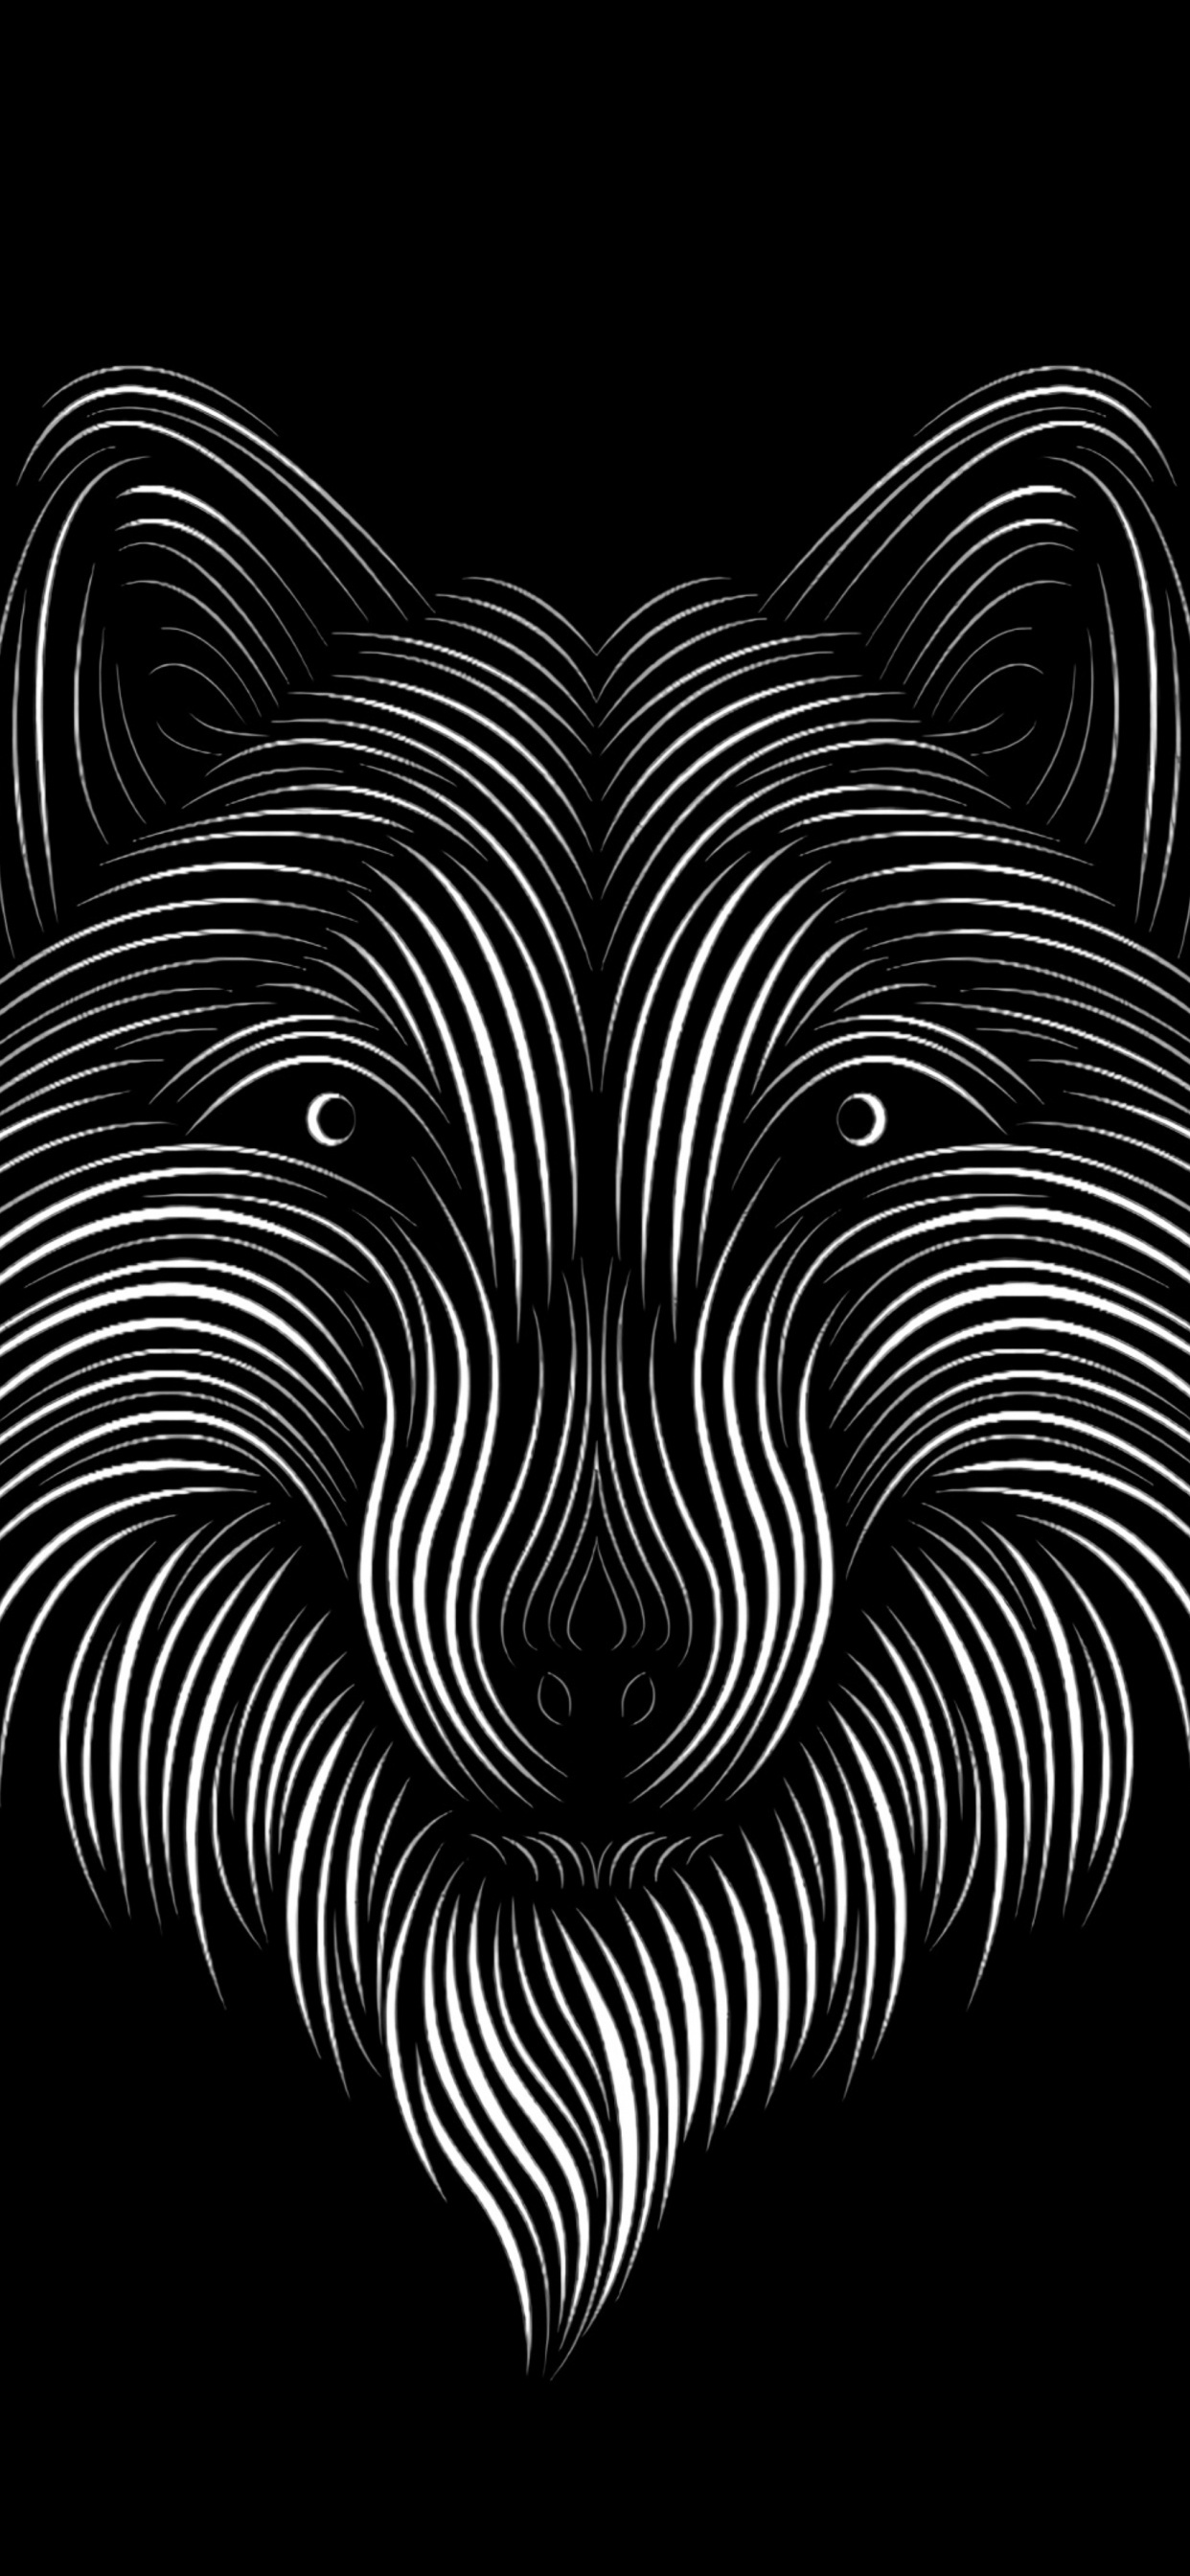 Black and White Zebra Illustration. Wallpaper in 1242x2688 Resolution